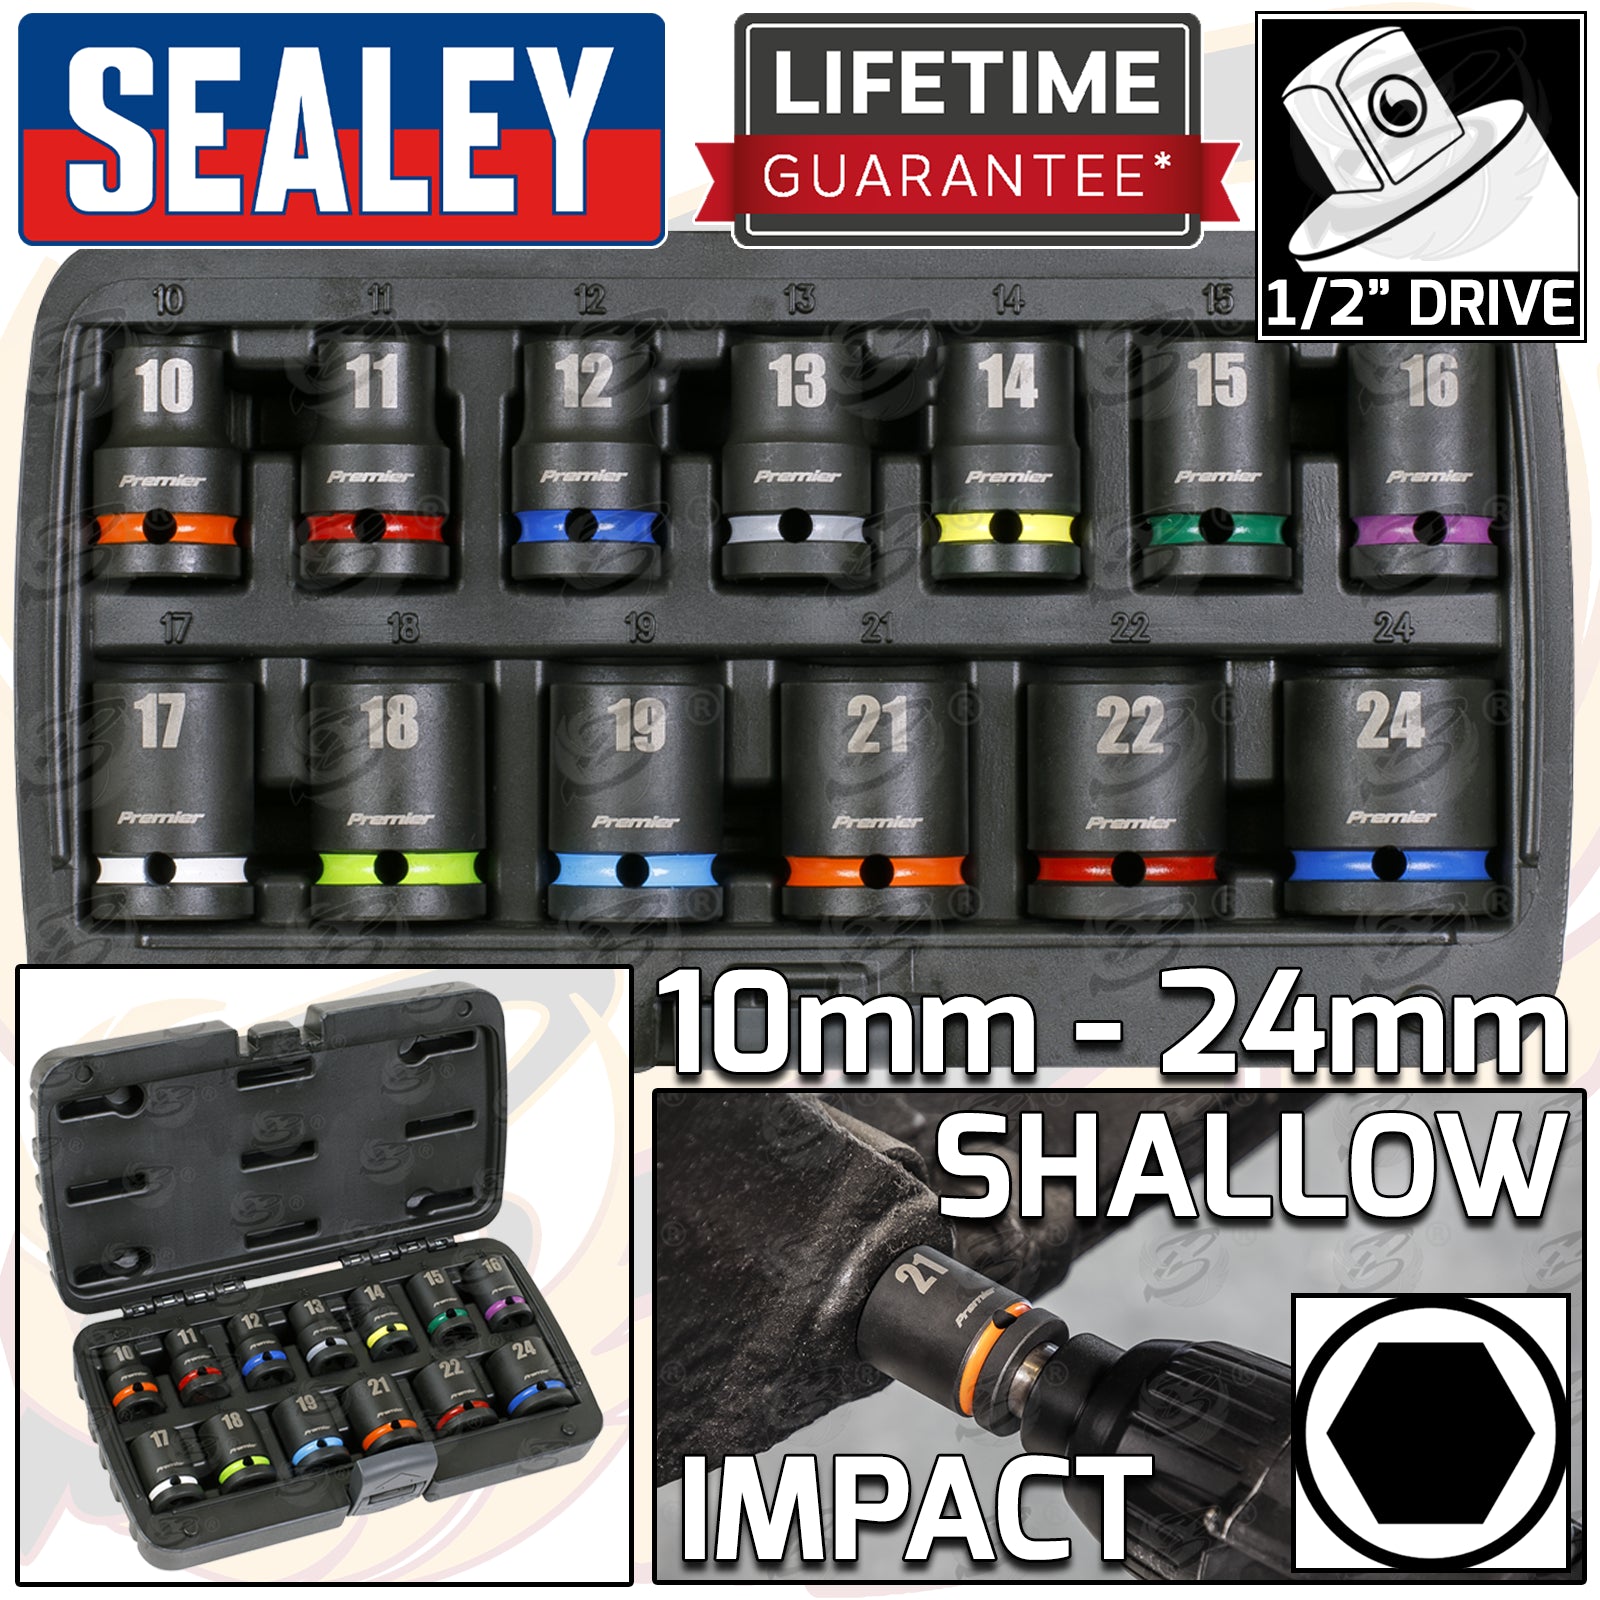 SEALEY 13PCS 1/2" DRIVE 6 POINT SHALLOW IMPACT SOCKETS 10MM - 24MM